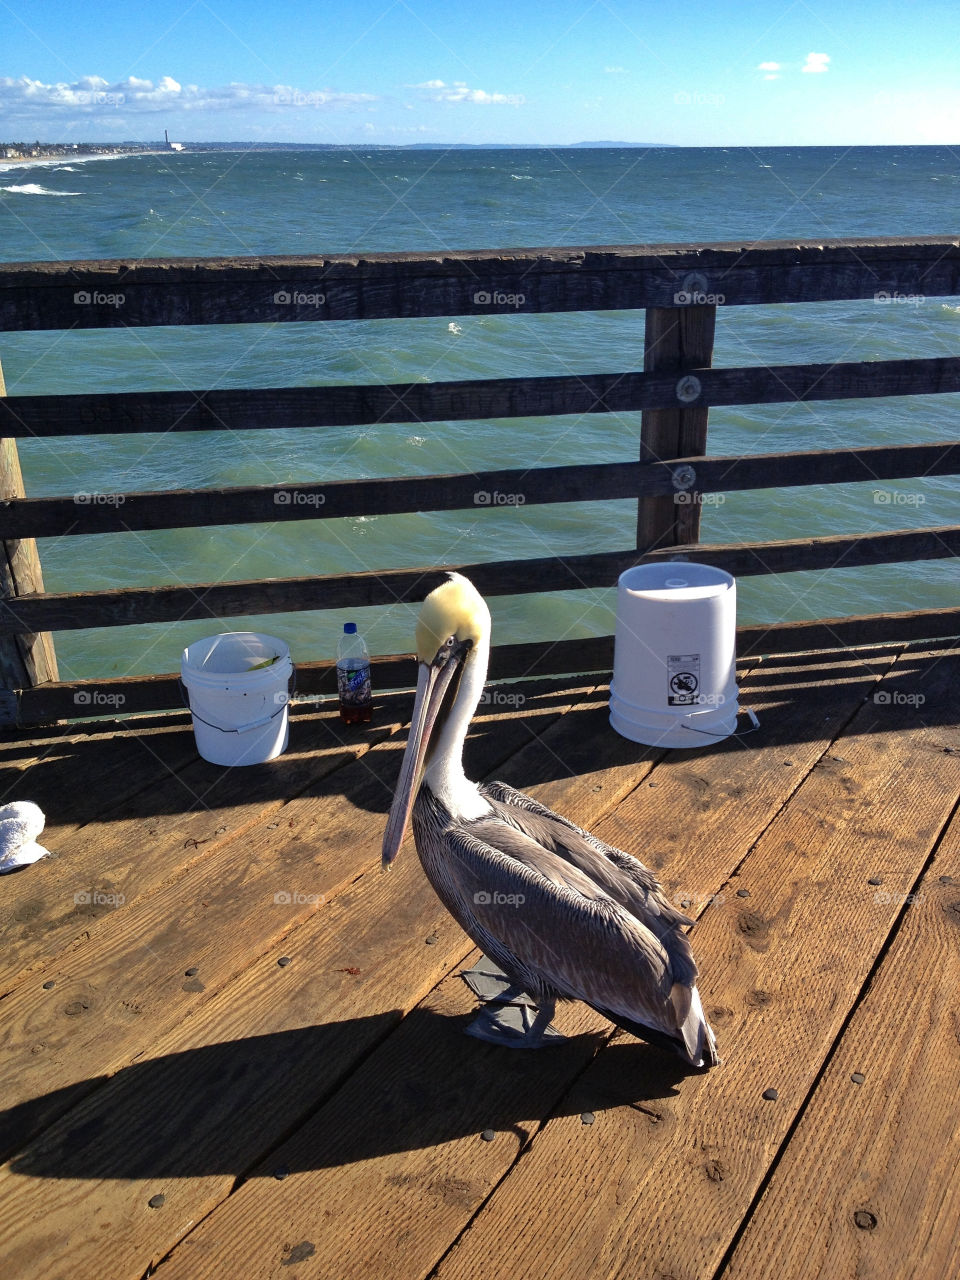 Pelican On The Pier